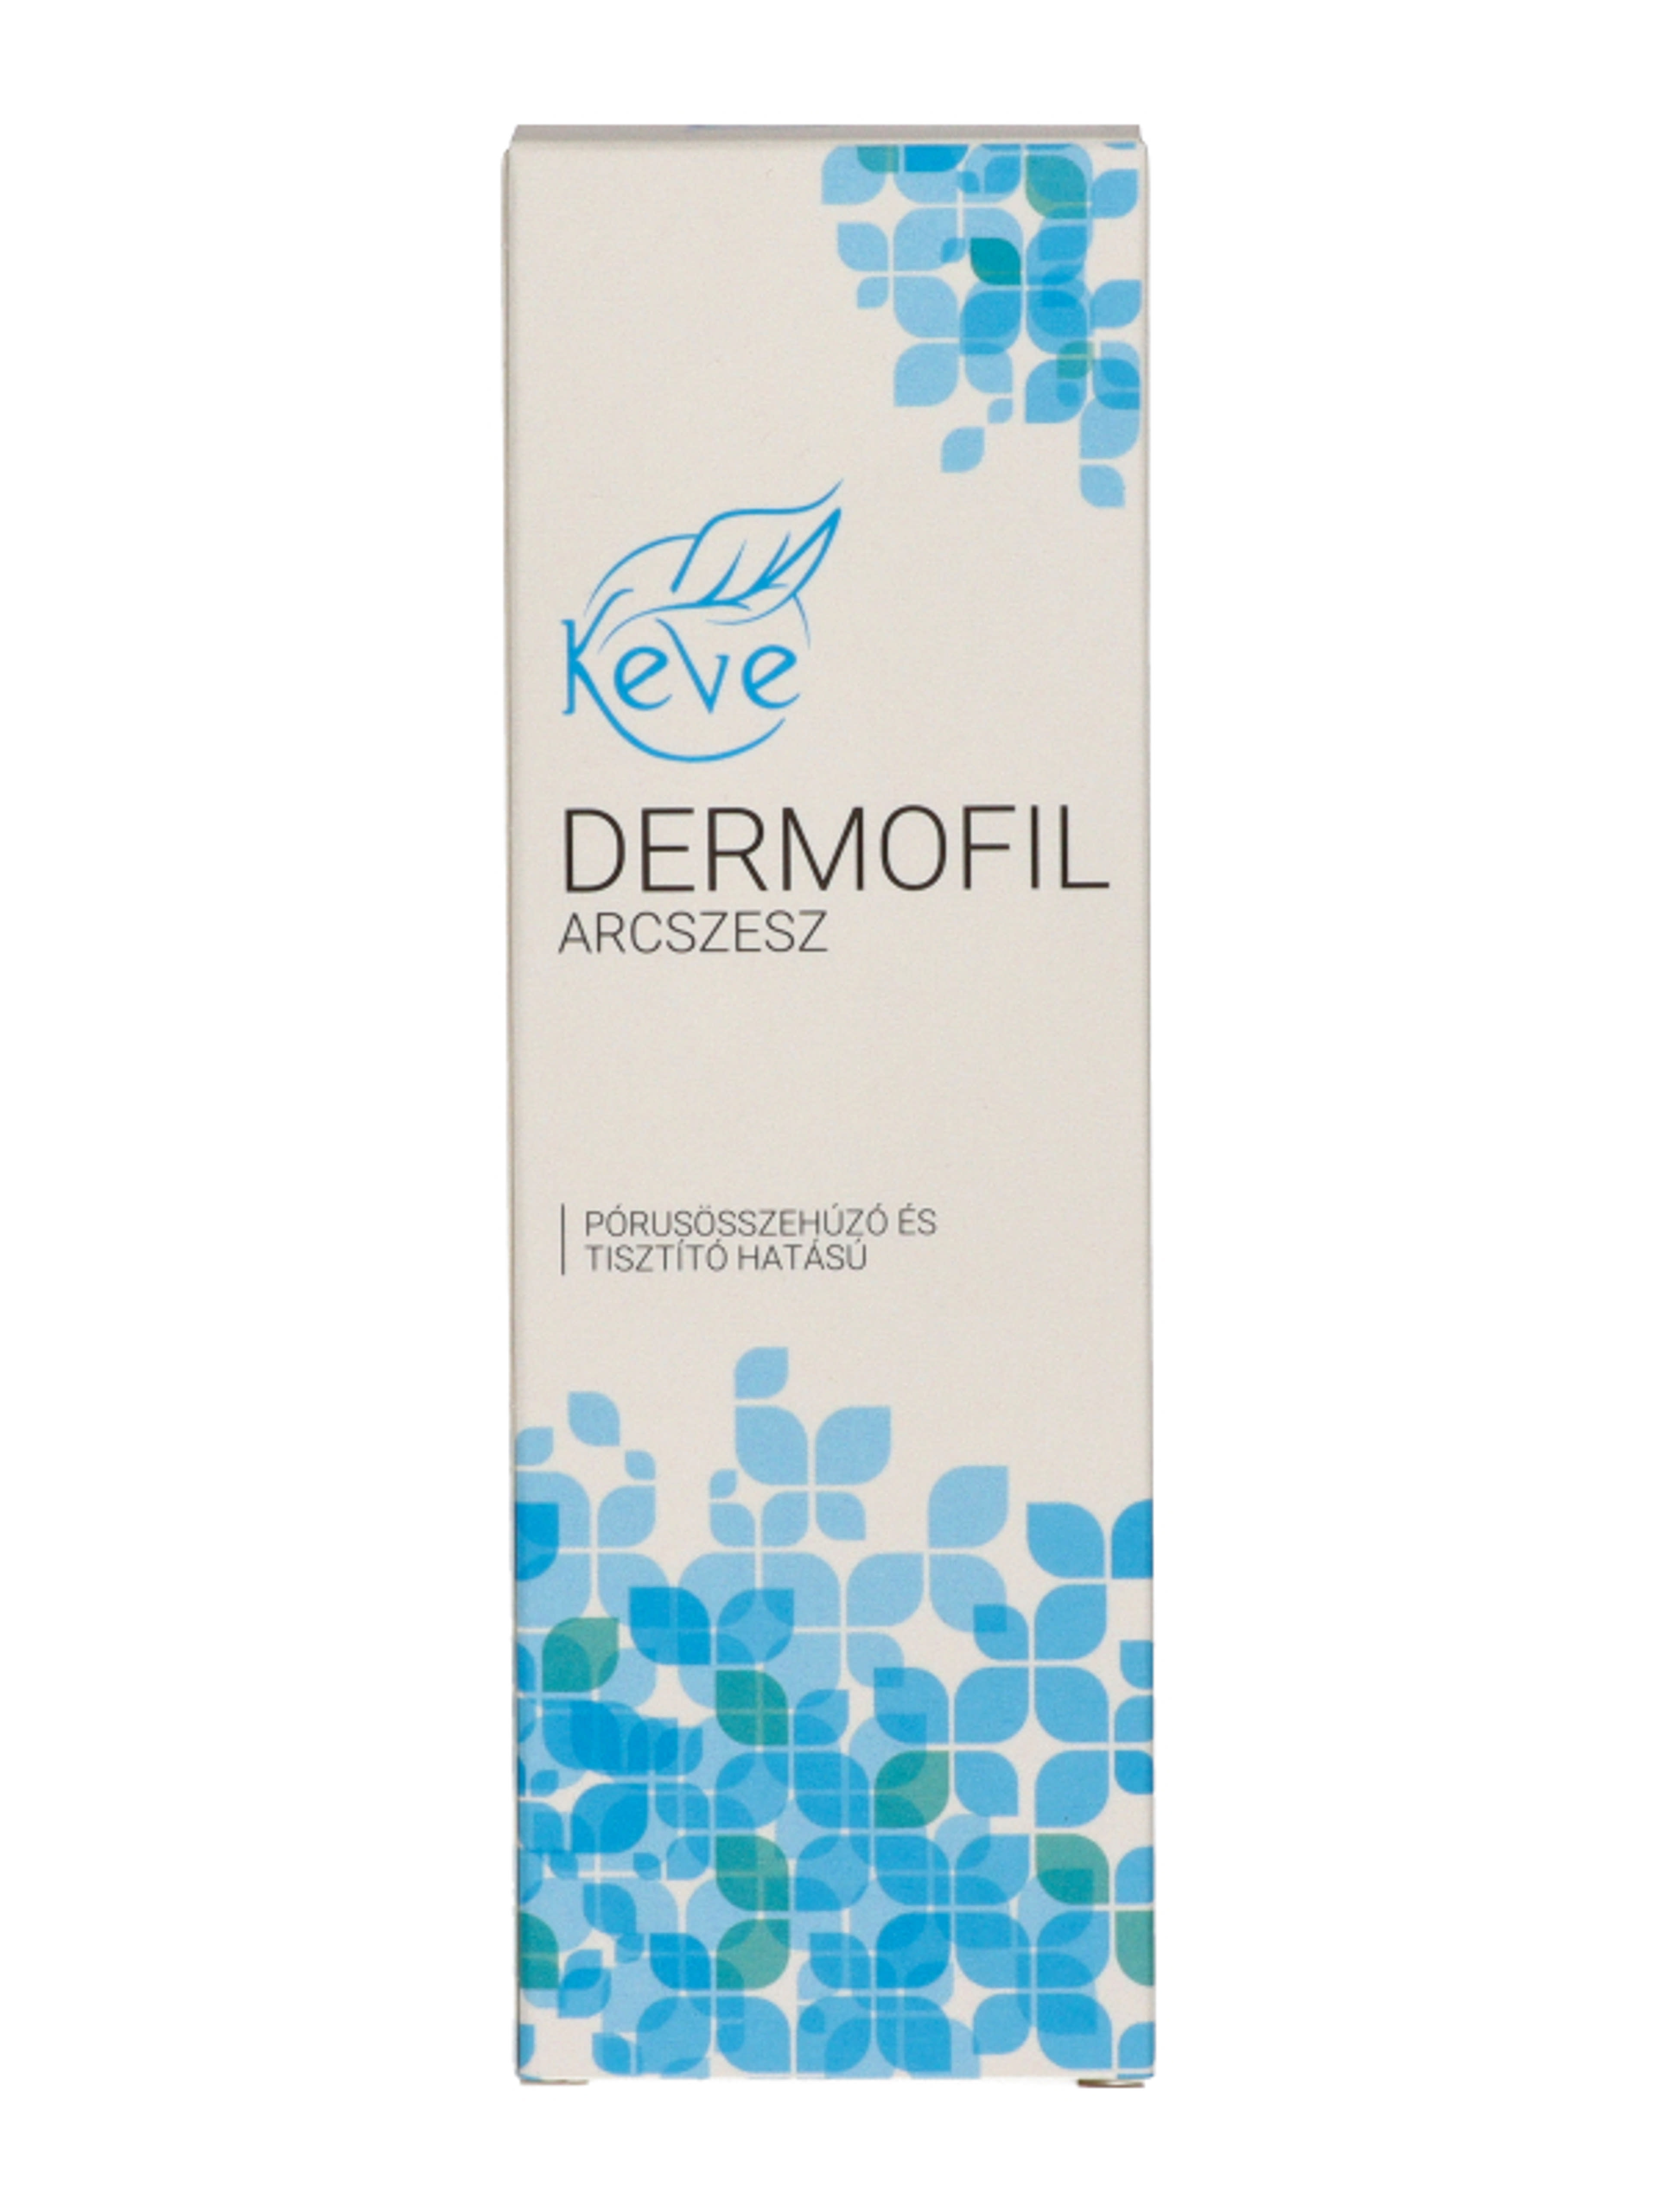 Keve Dermofil arcszesz - 200 ml